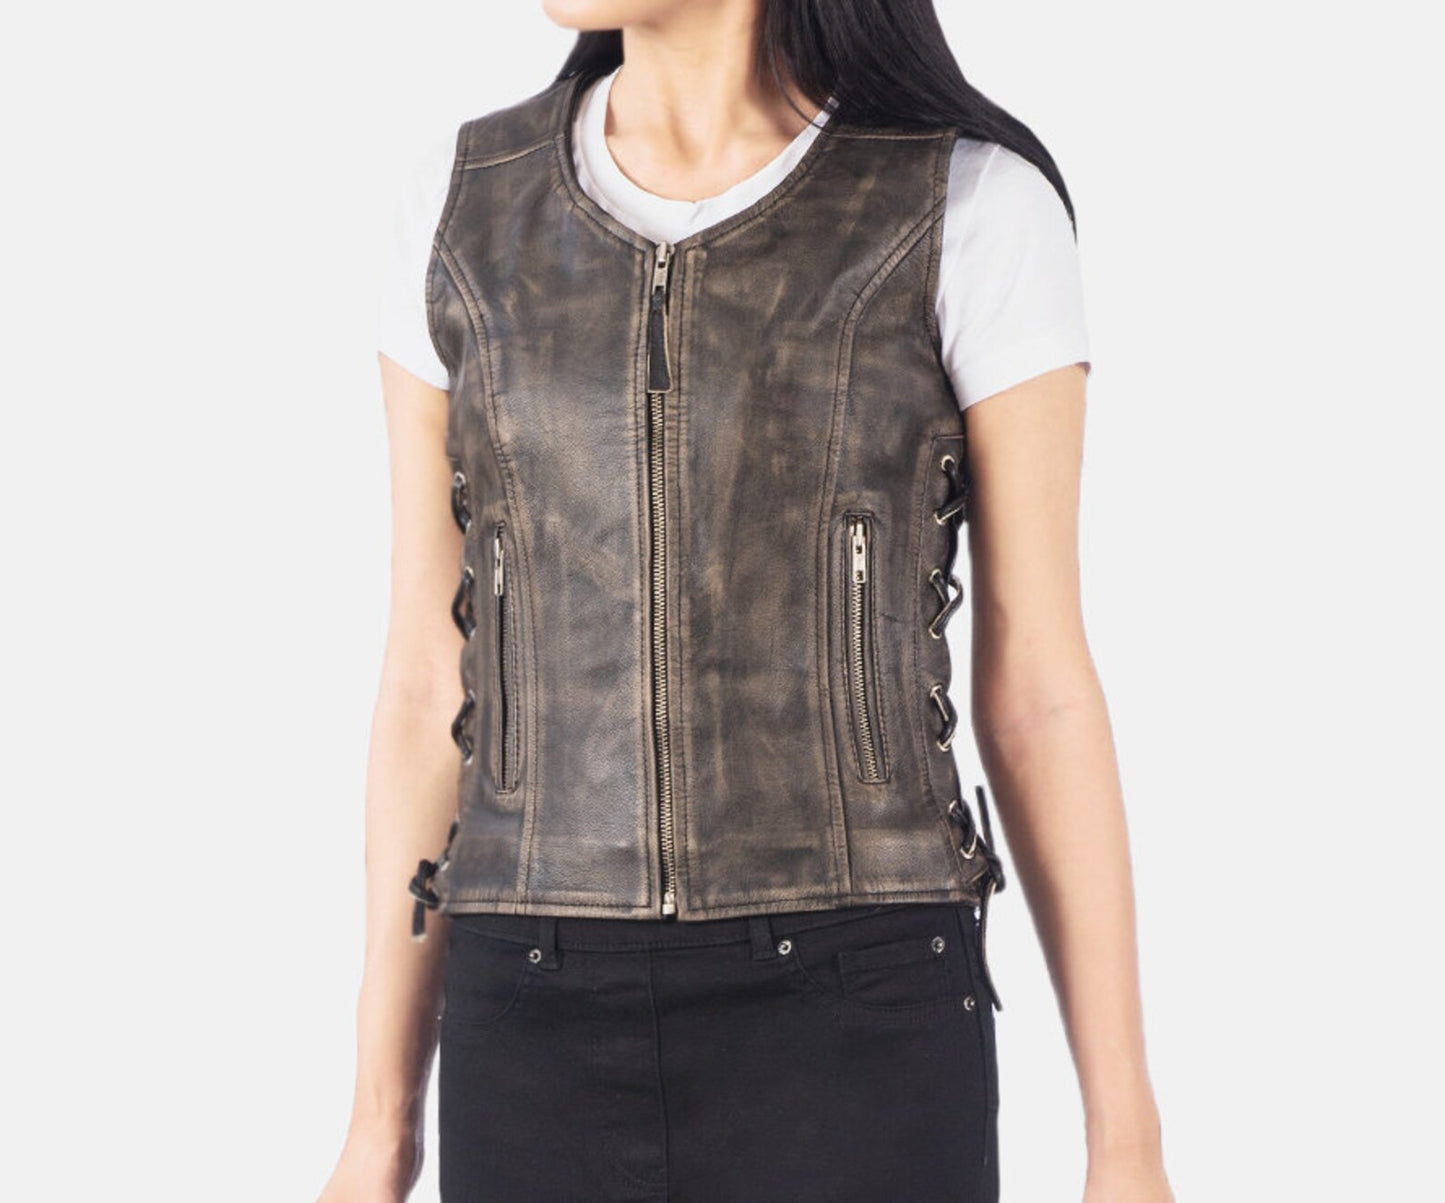 Distressed Original Leather Women Biker Vest